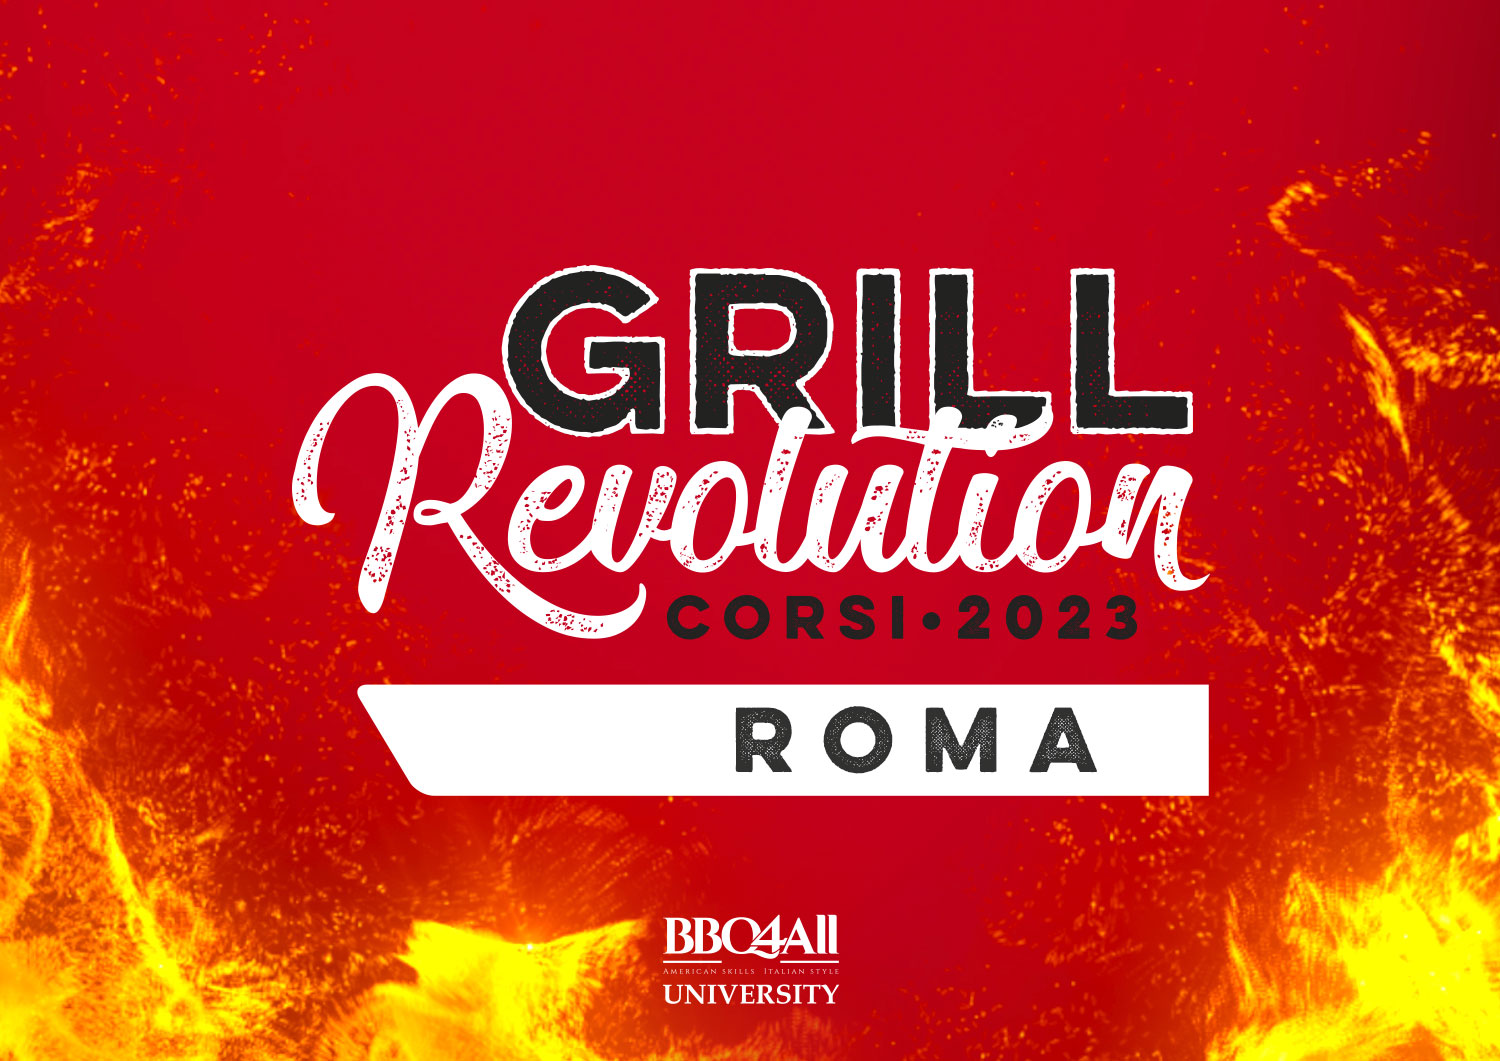 GRILL REVOLUTION Corsi 2023 - Roma - BBQ4All University